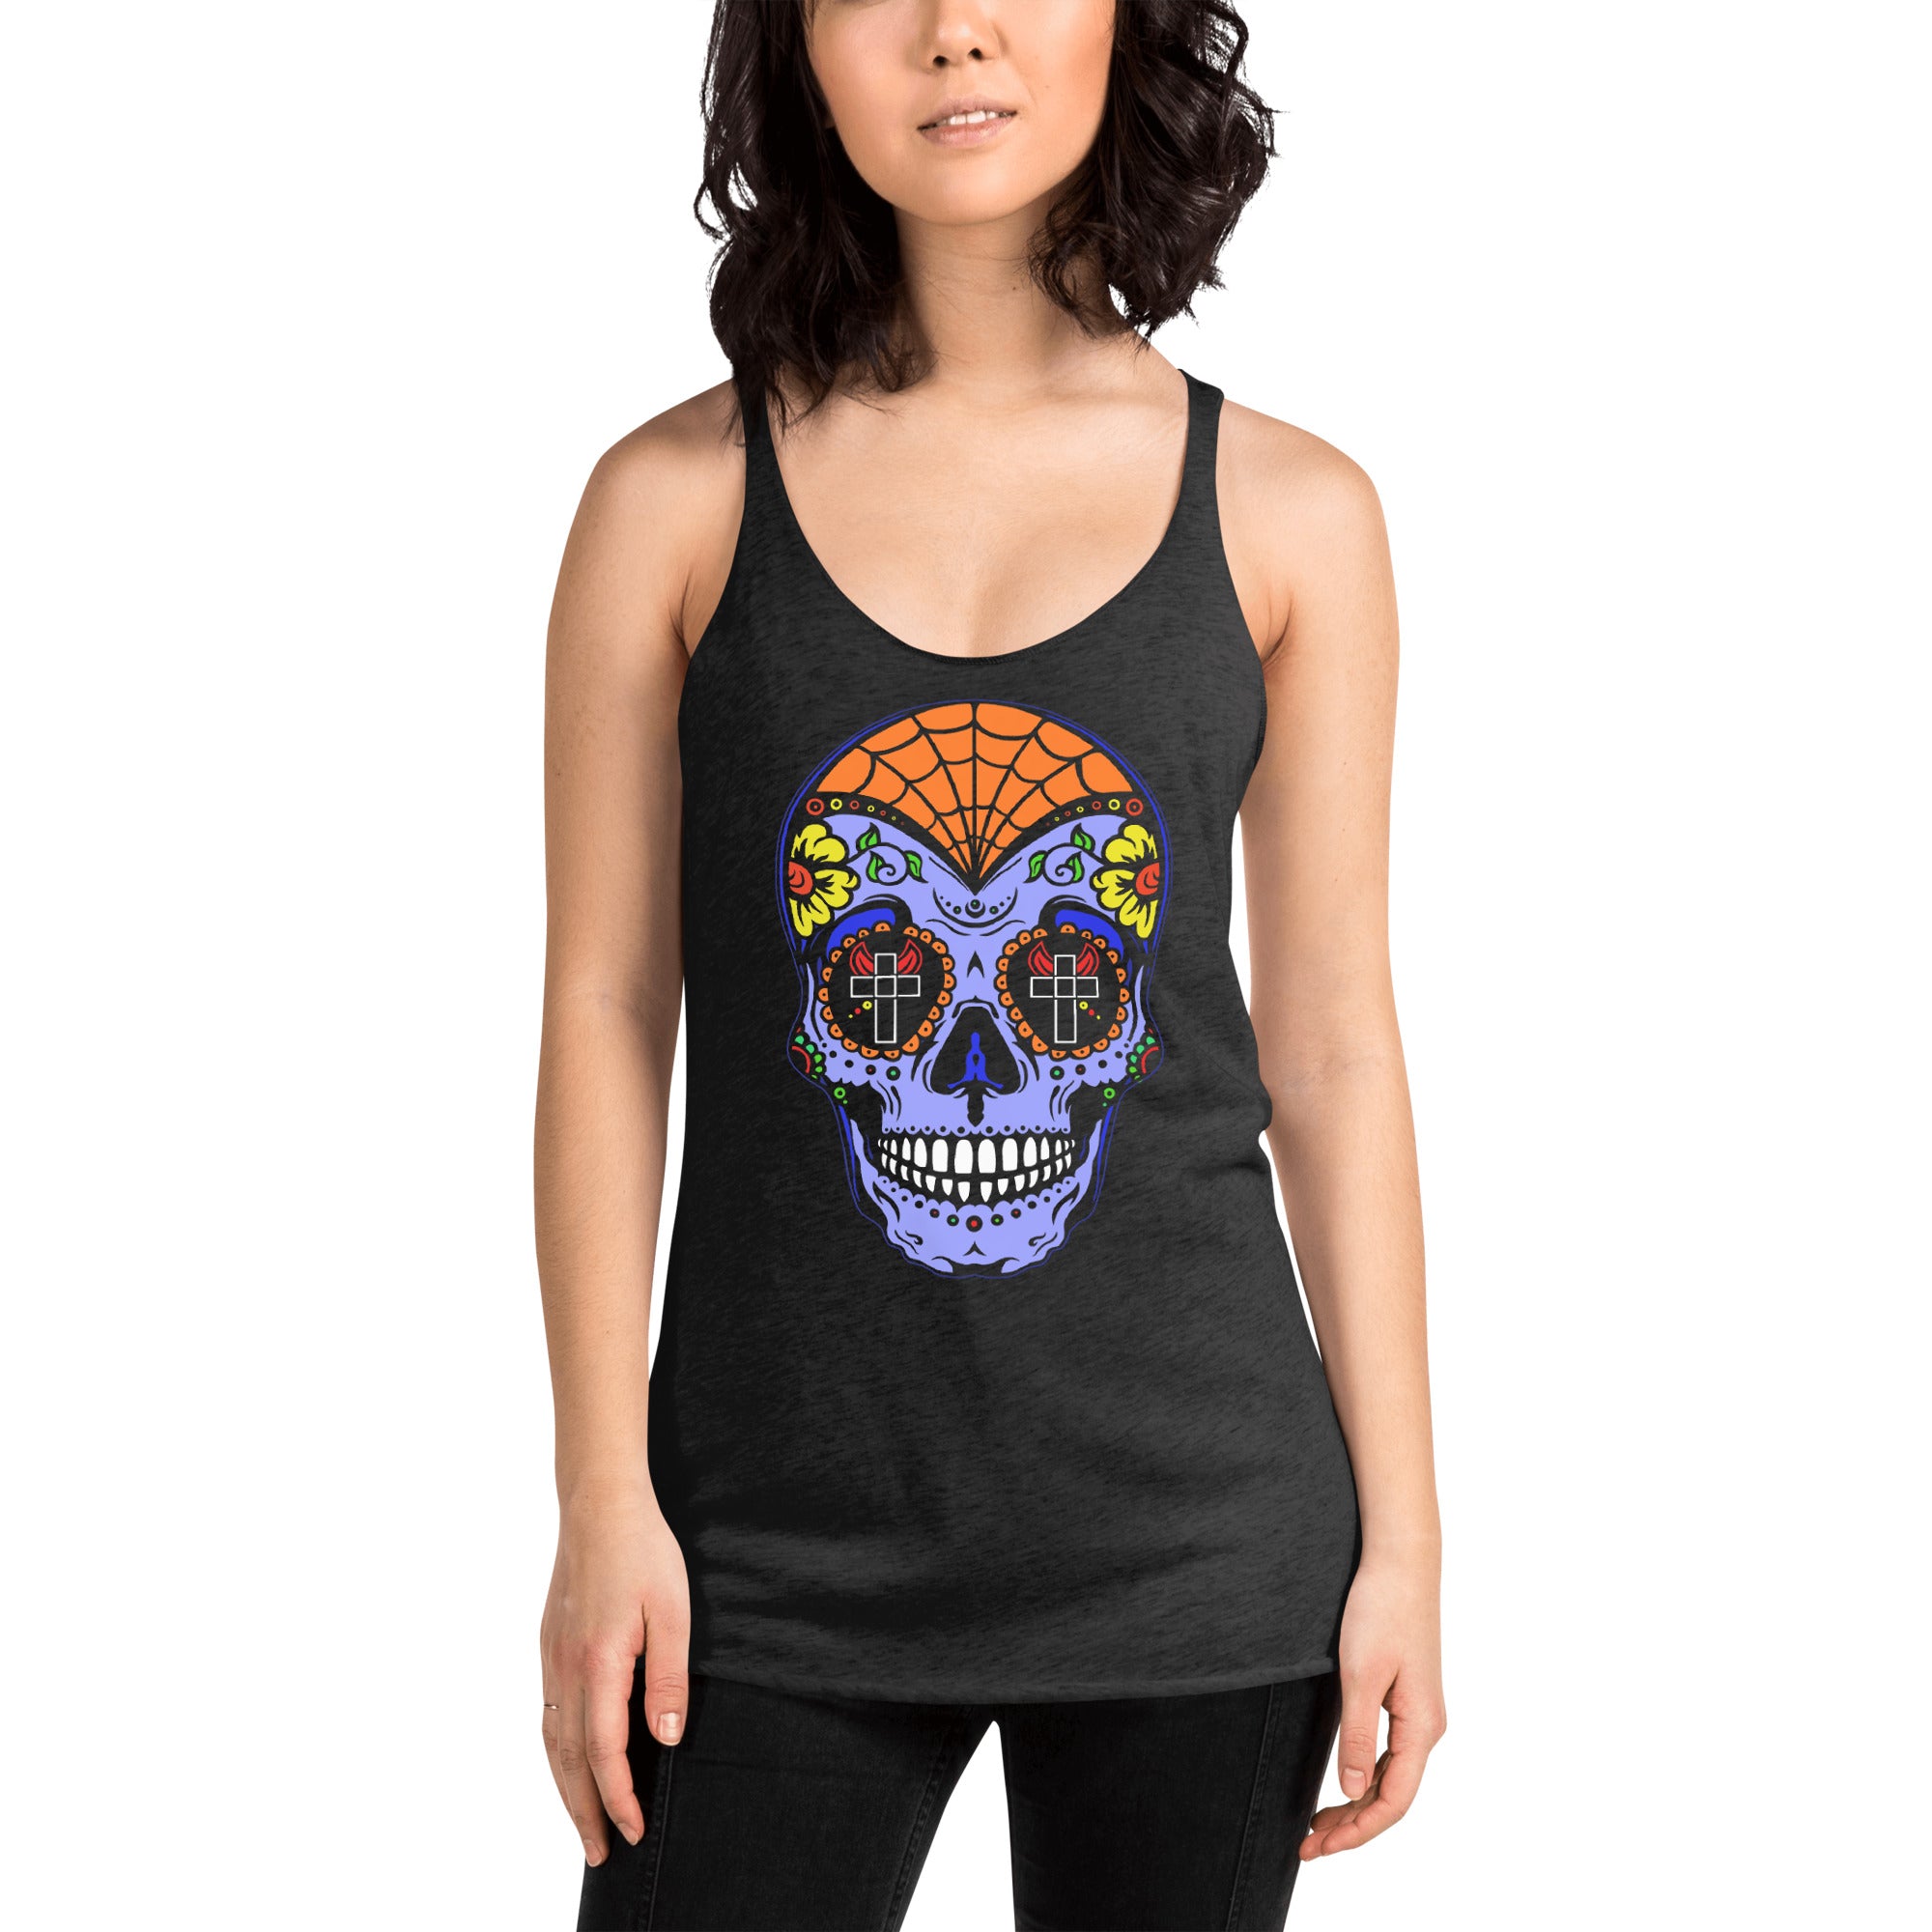 Blue Sugar Skull Day of the Dead Halloween Women's Racerback Tank Top Shirt - Edge of Life Designs